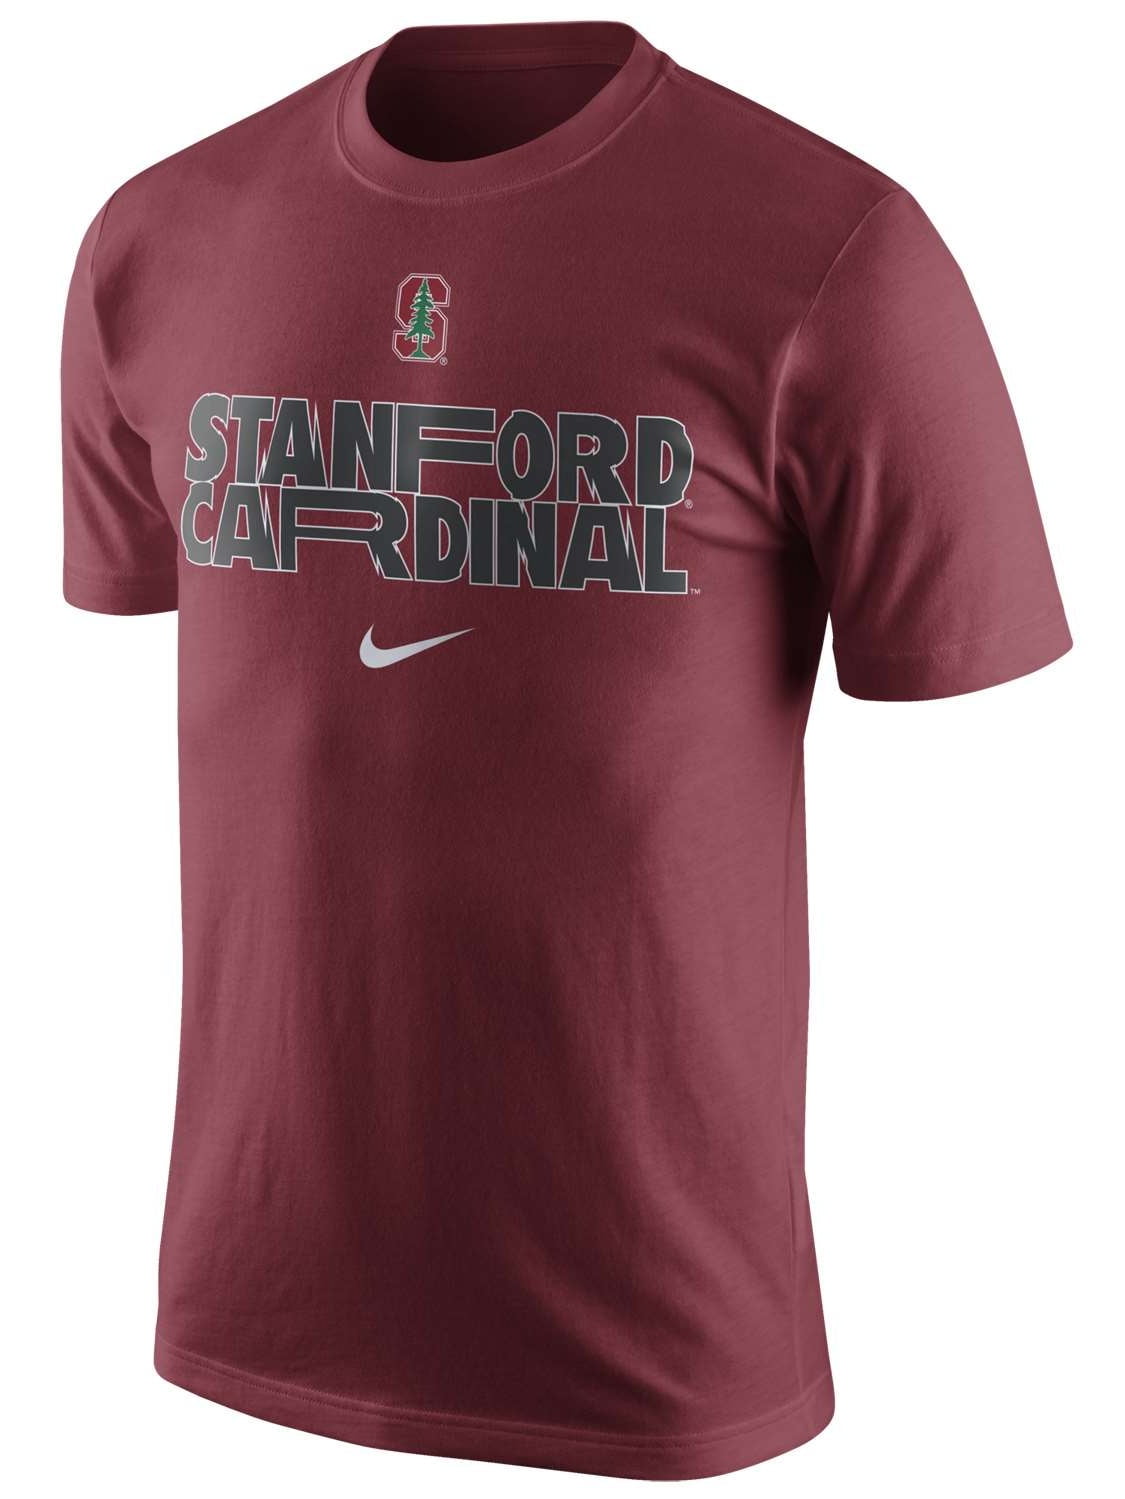 Nike - Nike Stanford Cardinal Local Cotton T-Shirt - Walmart.com ...